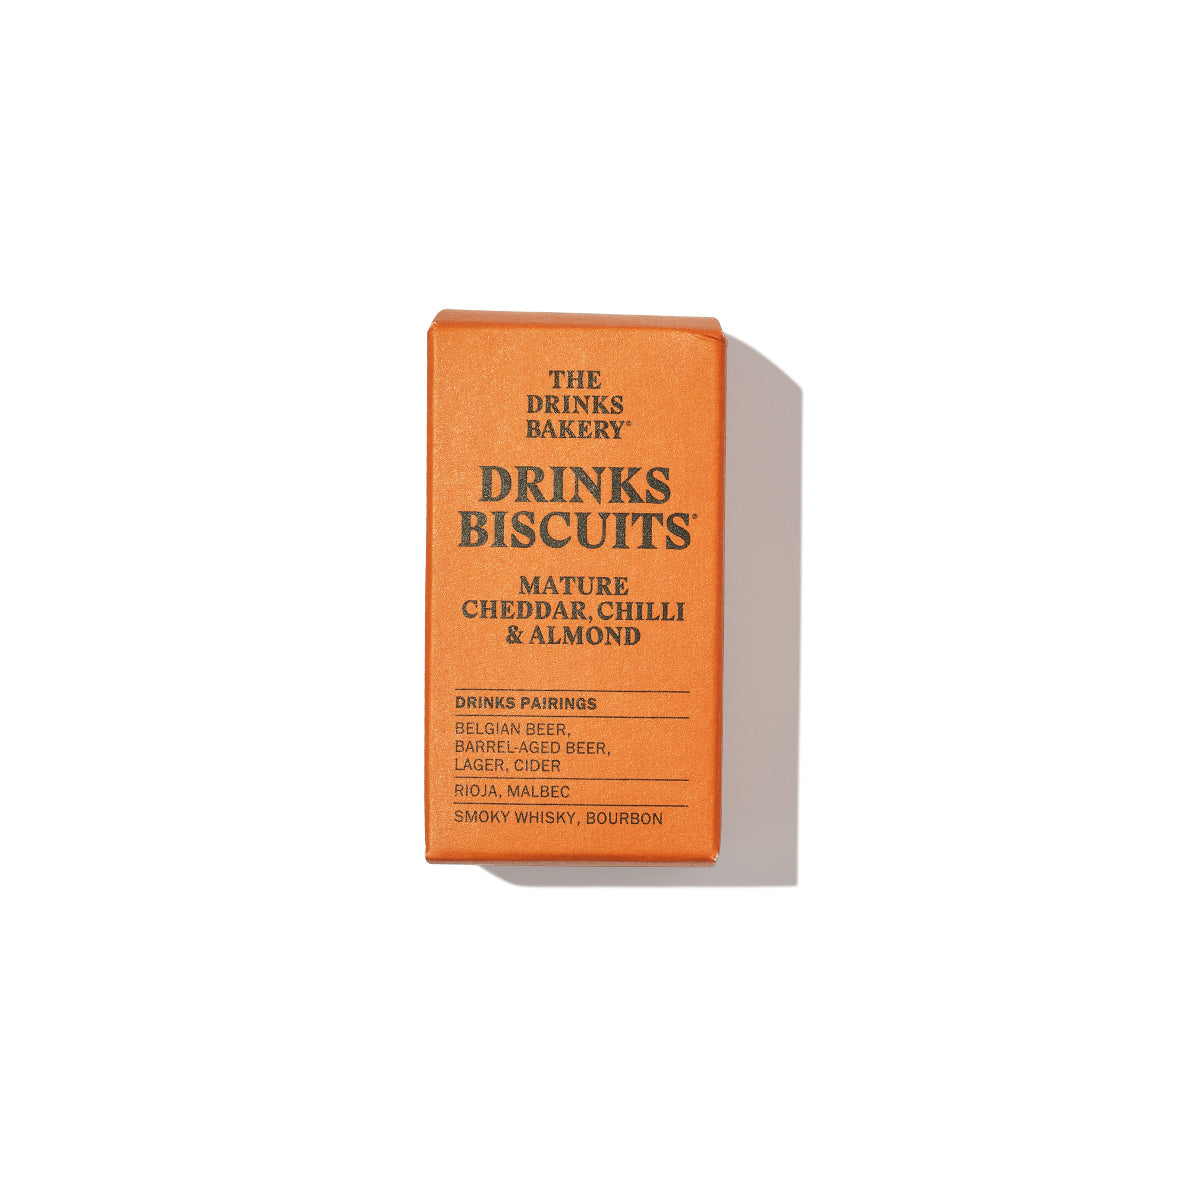 Drinks-Biscuits-36g-Orange-1200W_01347fb3-f121-4119-bd78-08cab1cbb5d5.jpg